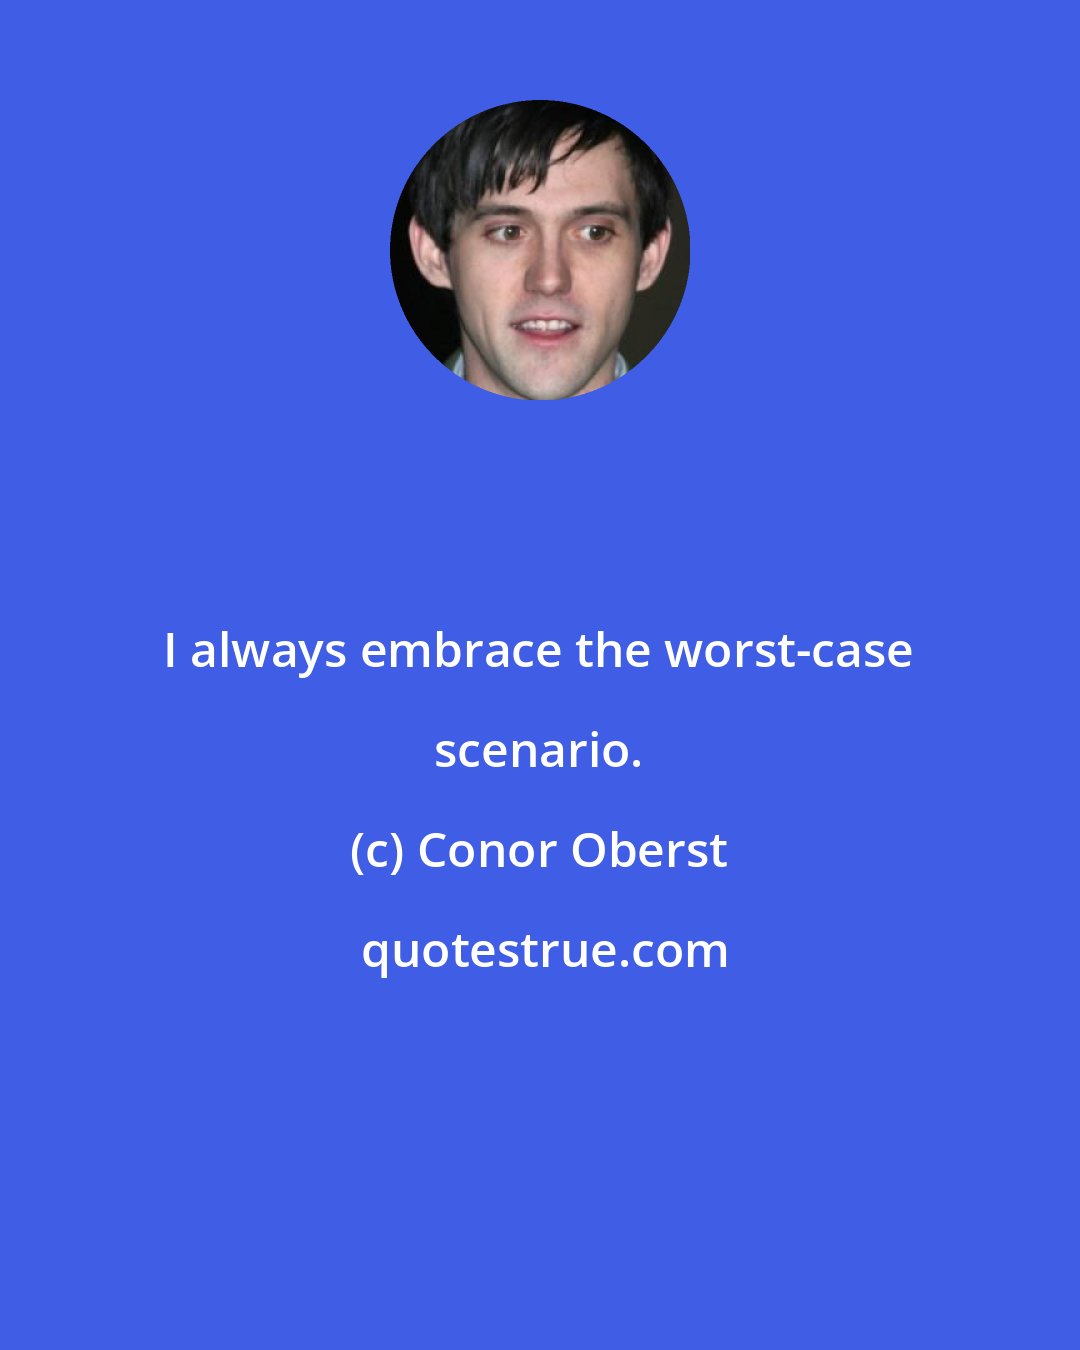 Conor Oberst: I always embrace the worst-case scenario.